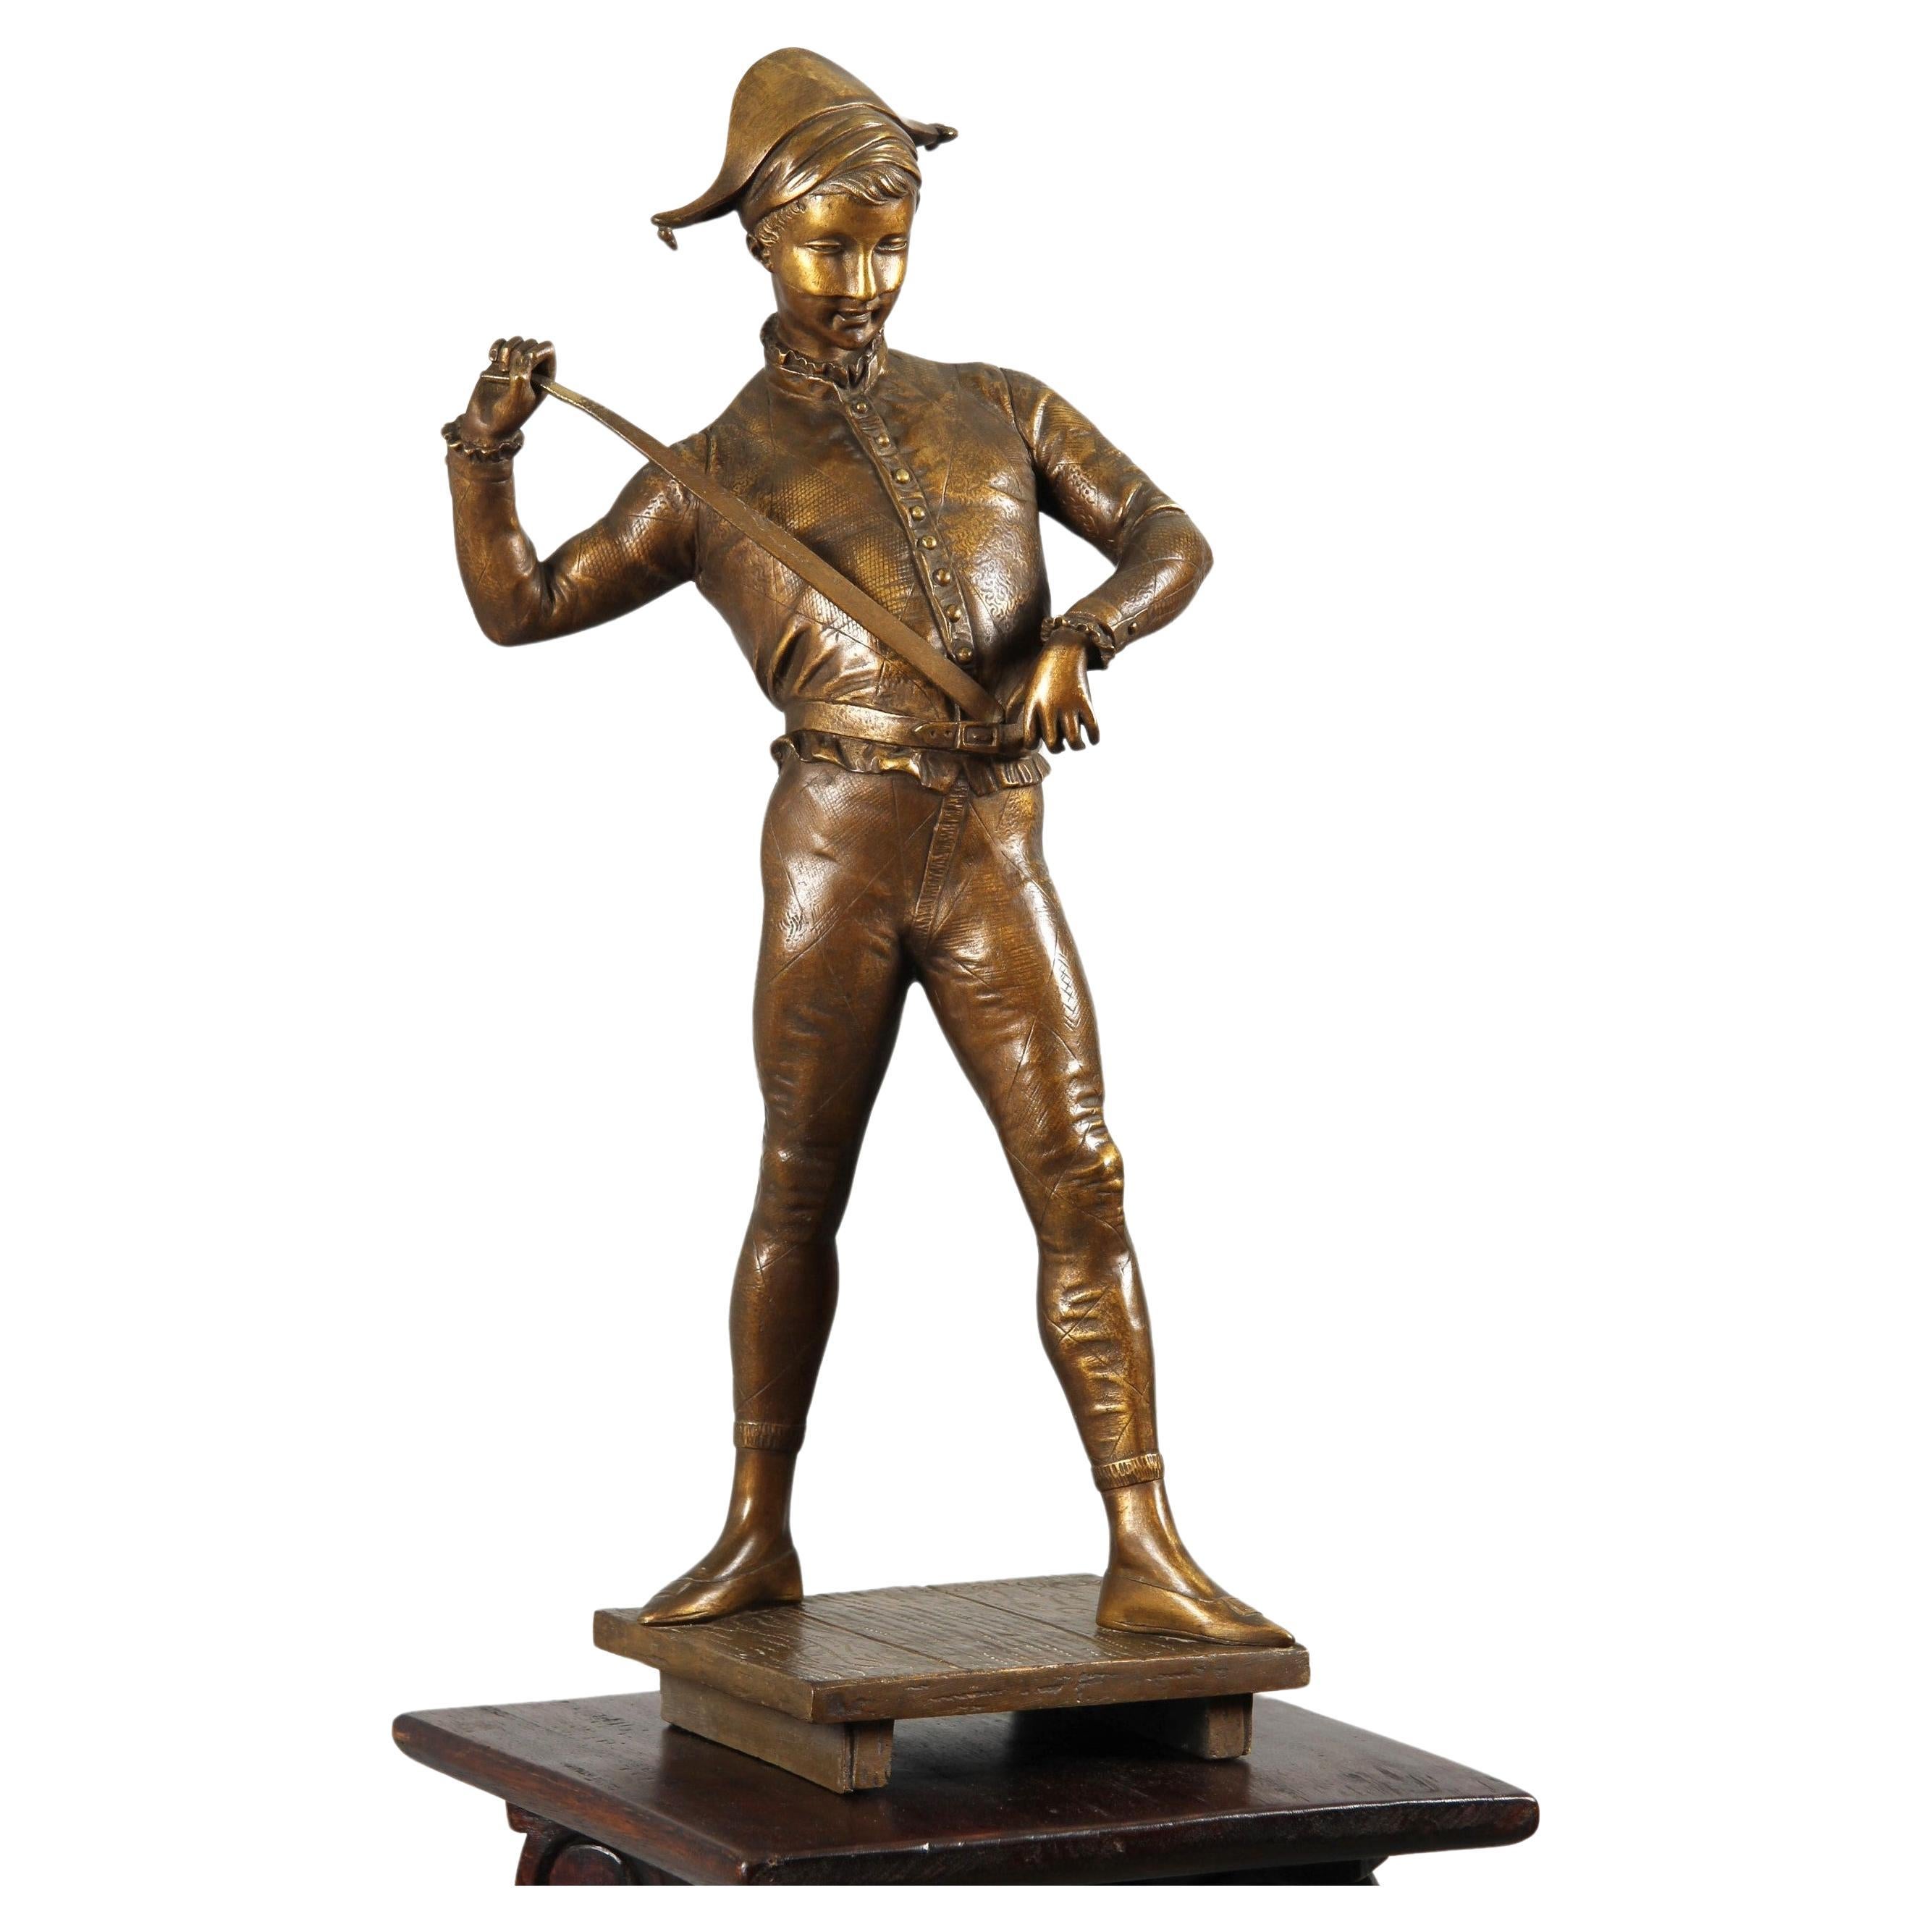 Paul Dubois 1827-1905, Sculpture d'Arlequin, bronze, France, vers 1880